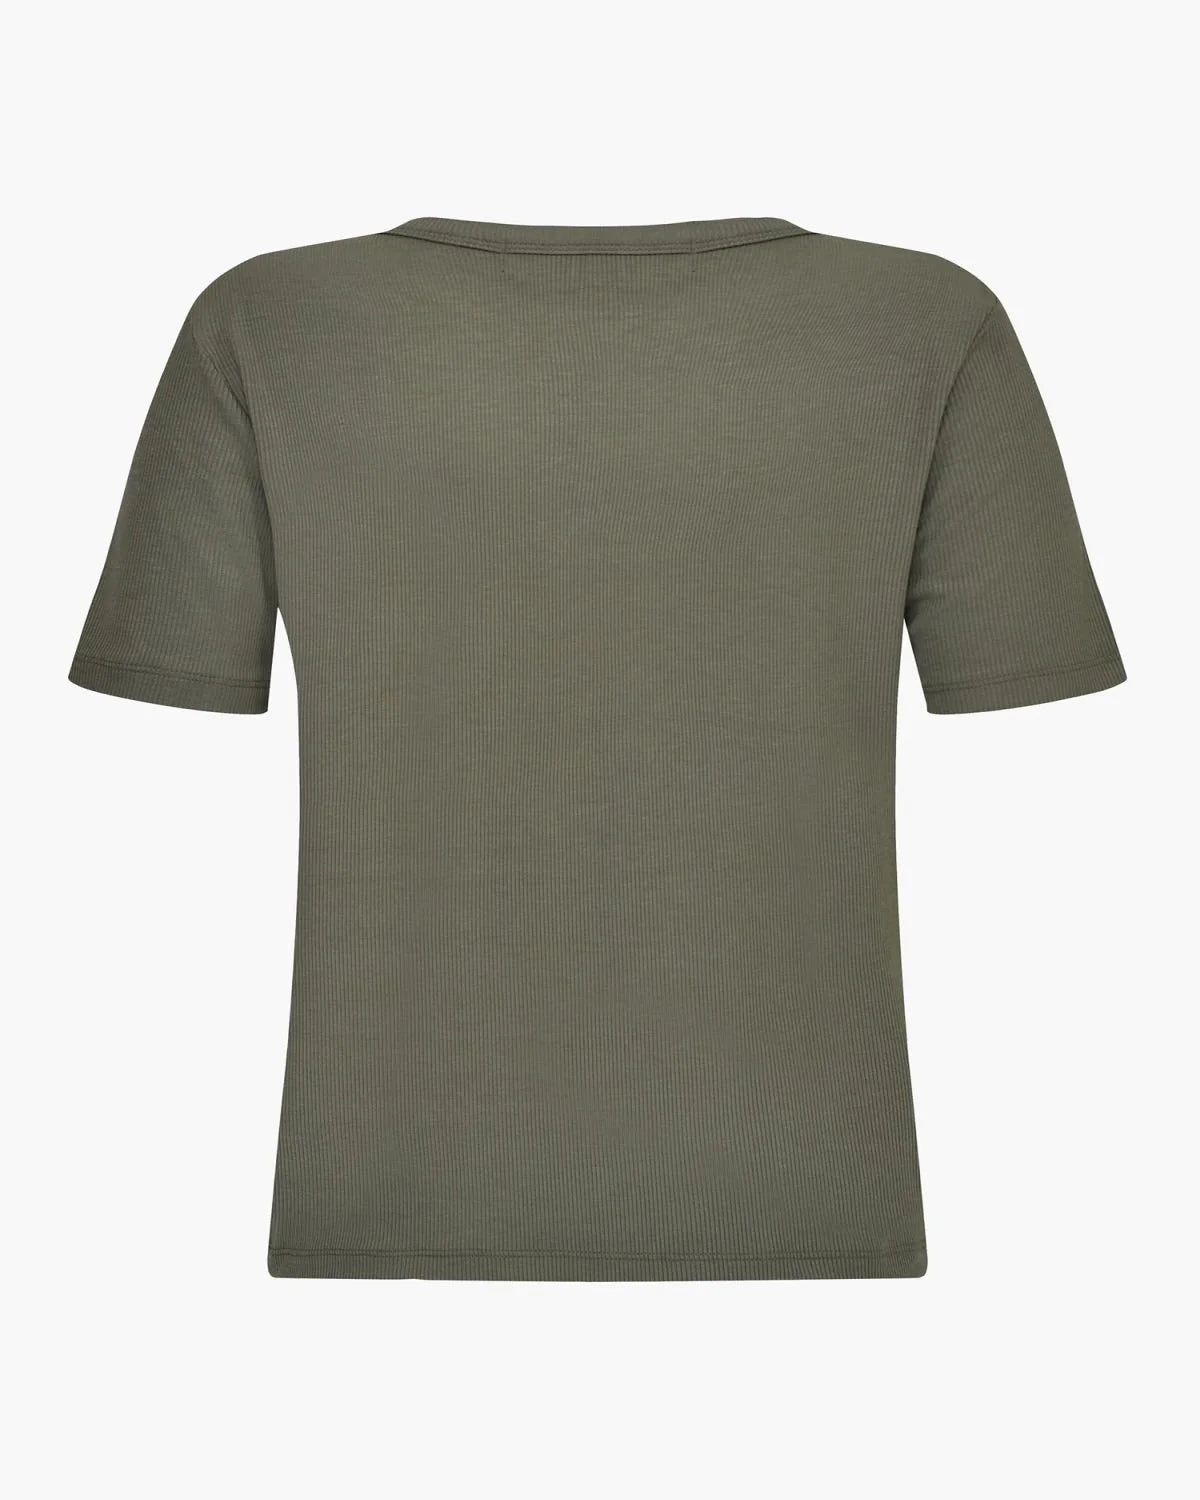 Sofie Schnoor T-shirt Army Green